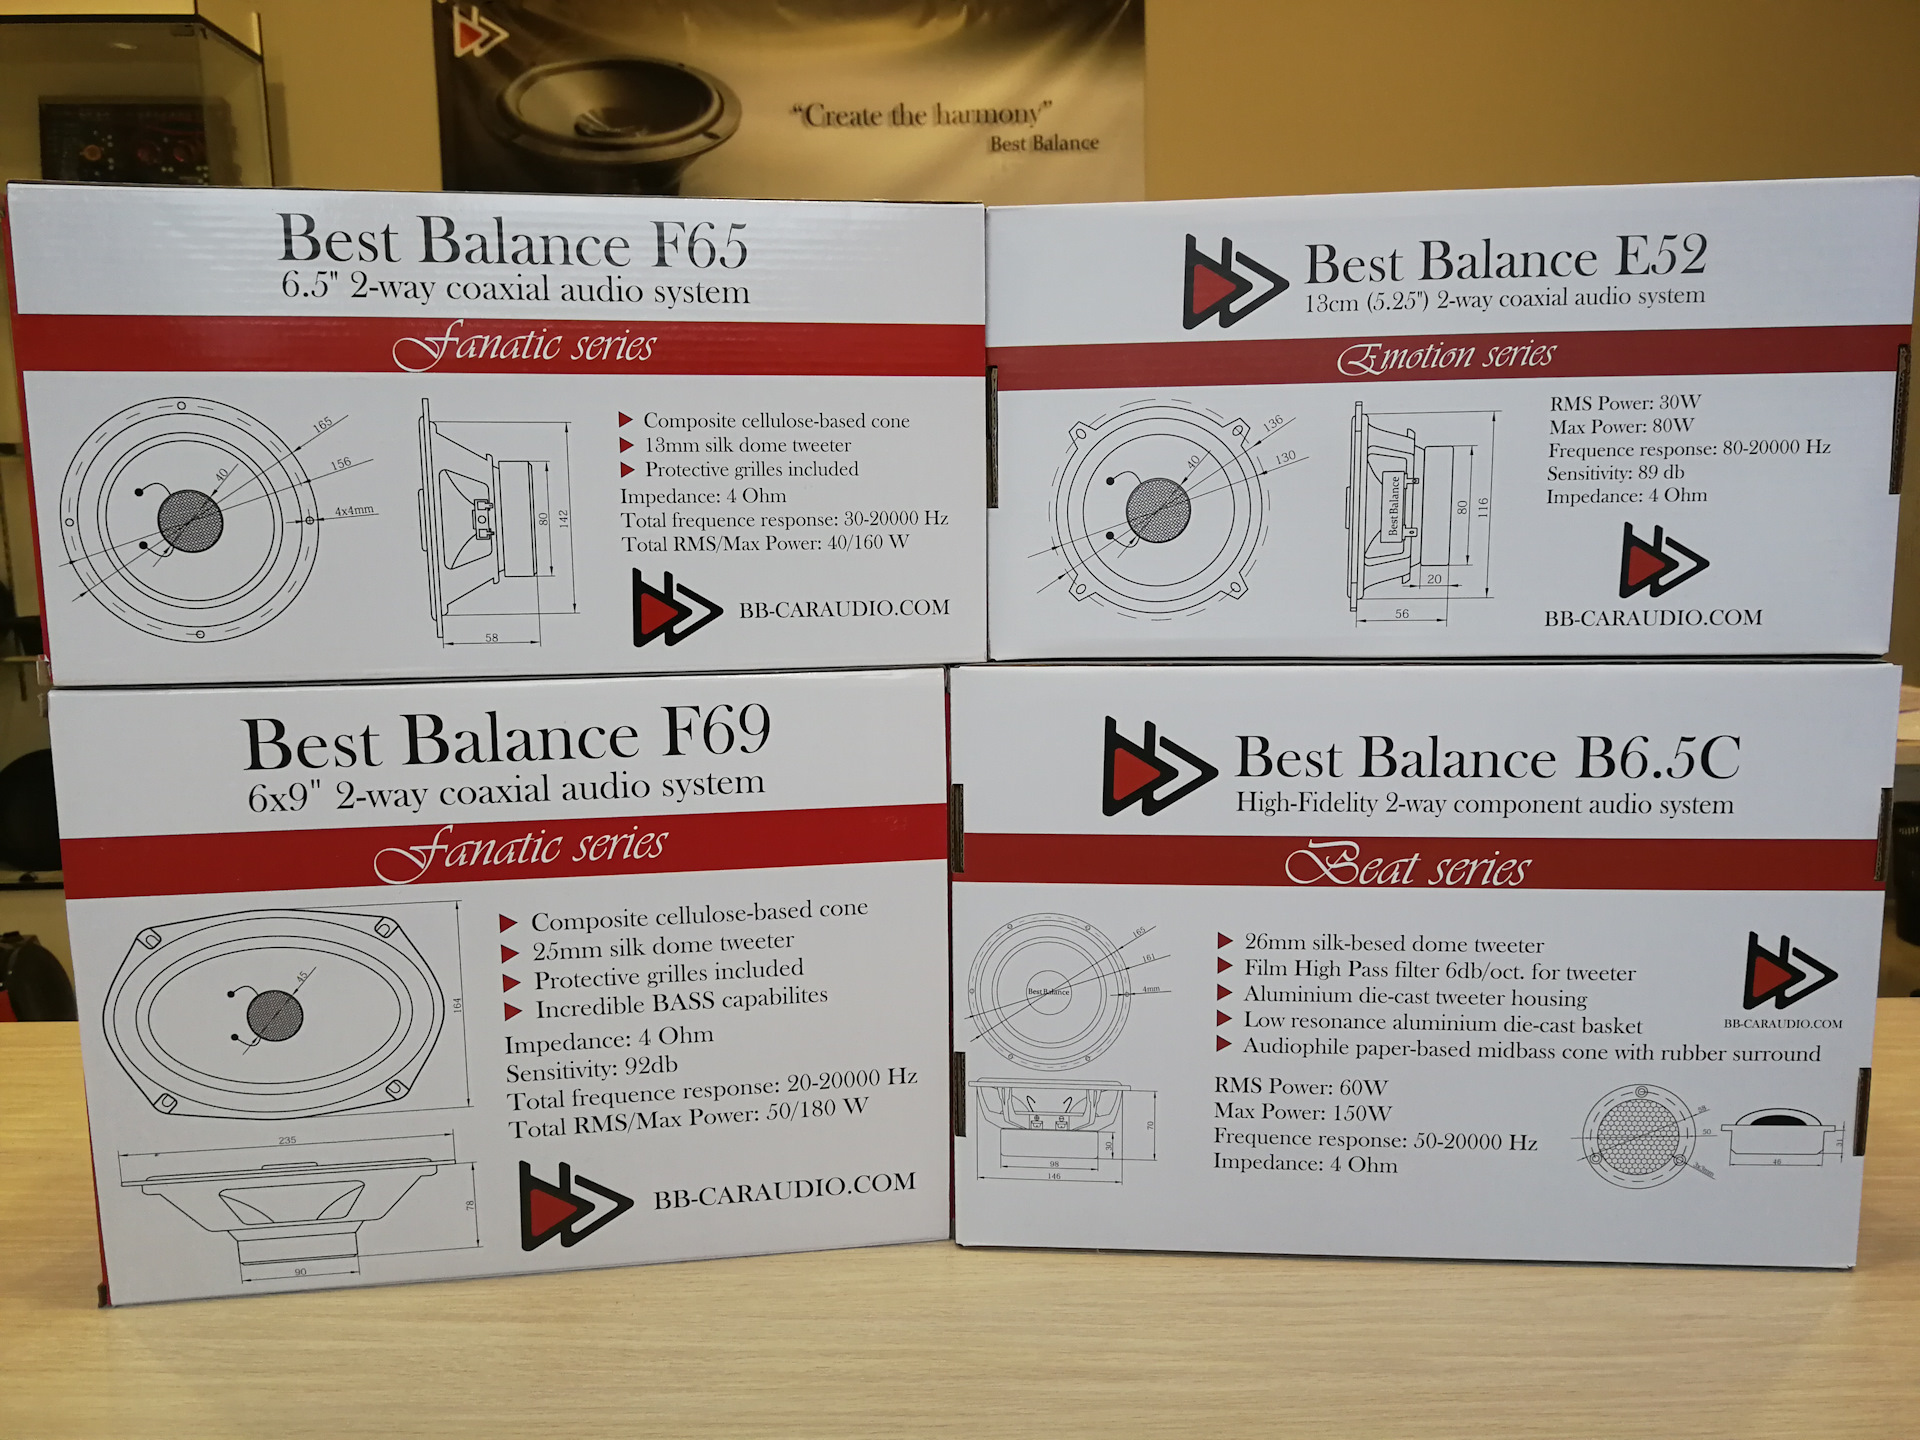 Best balance d8c. Best Balance b6.5c Размеры. Бест баланс б6.5с. Best Balance b26t Размеры. Динамики best Balance e52.